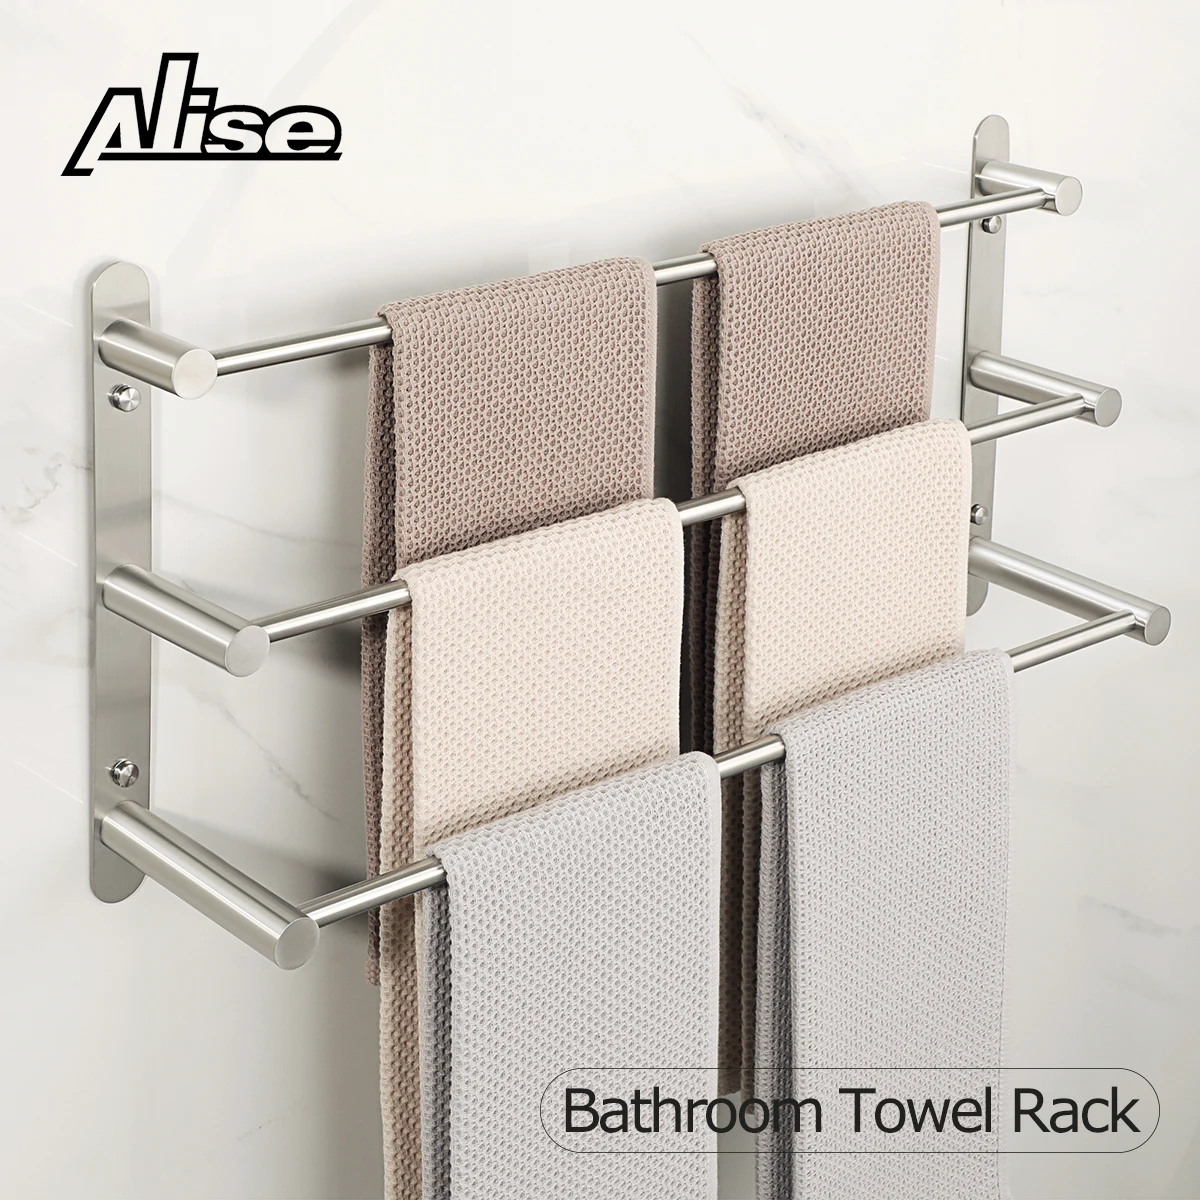 Bathroom Towel Rack Ladder Design Stainless Steel Towel Holder Wall Mount Rail 3-Tiers Ladder Towels Shelves Bathroom Accessorie